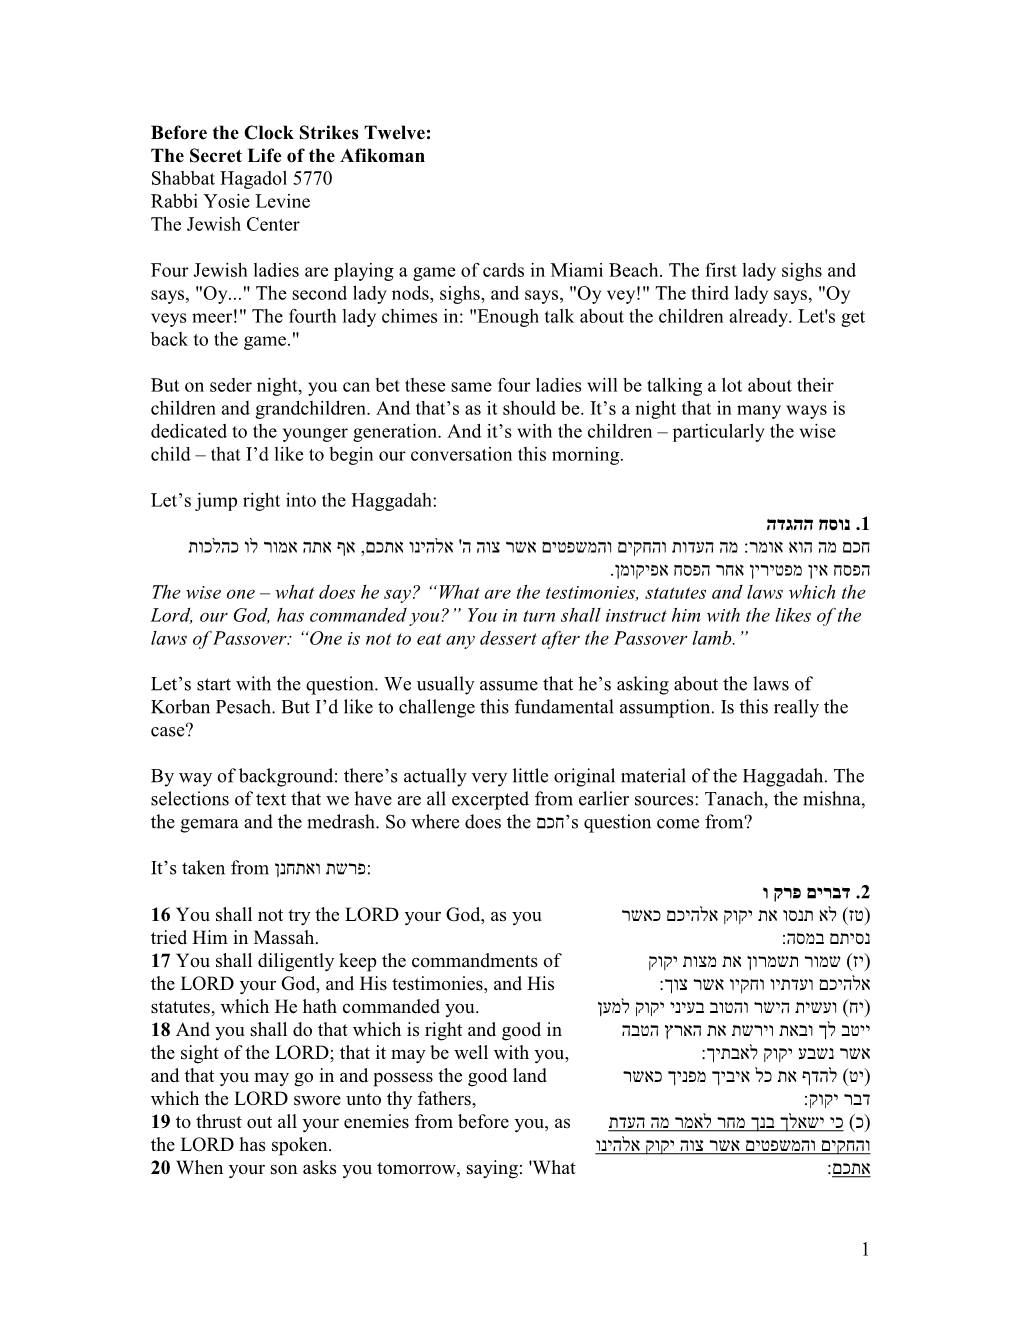 The Secret Life of the Afikoman Shabbat Hagadol 5770